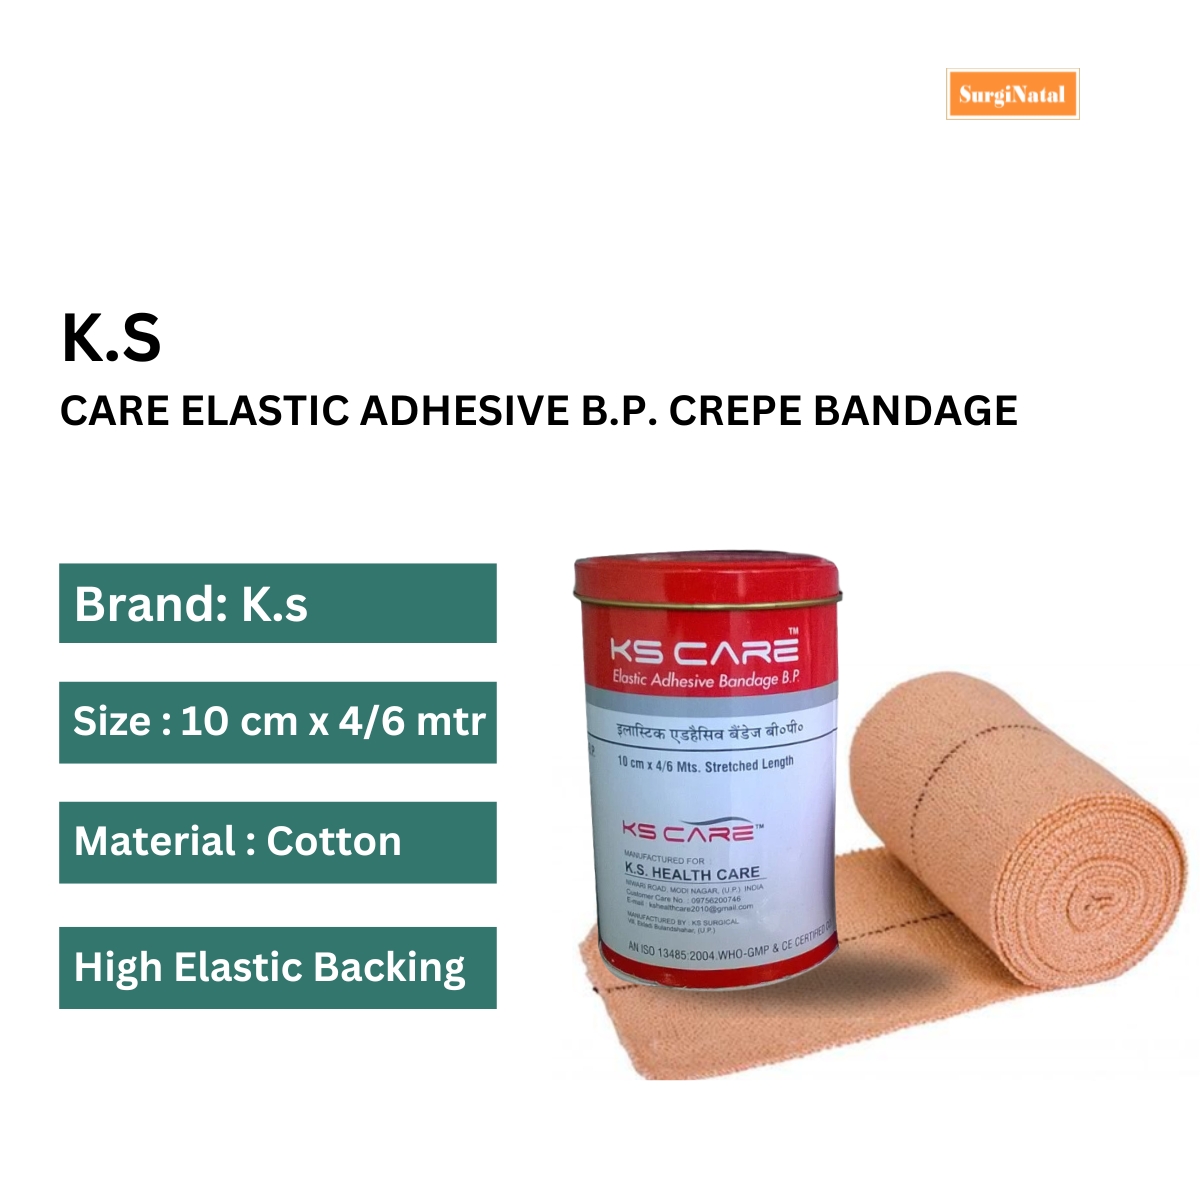 ks care elastic adhesive b.p. crepe bandage 10cm x 4/6 mts